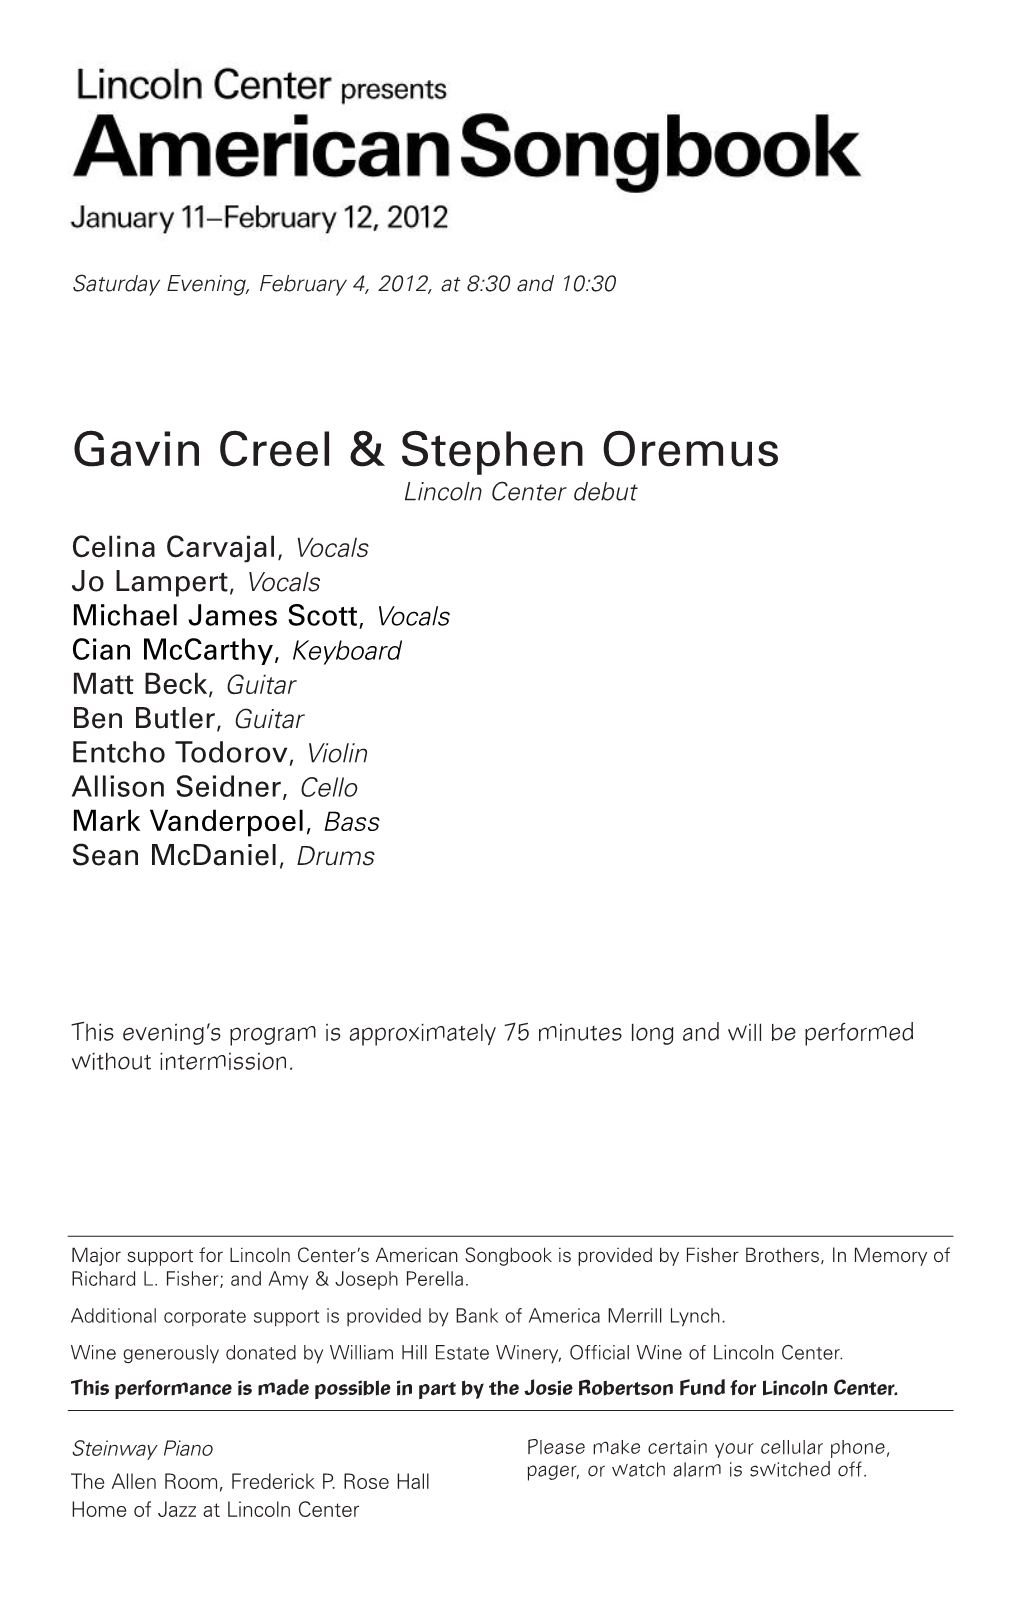 Gavin Creel & Stephen Oremus